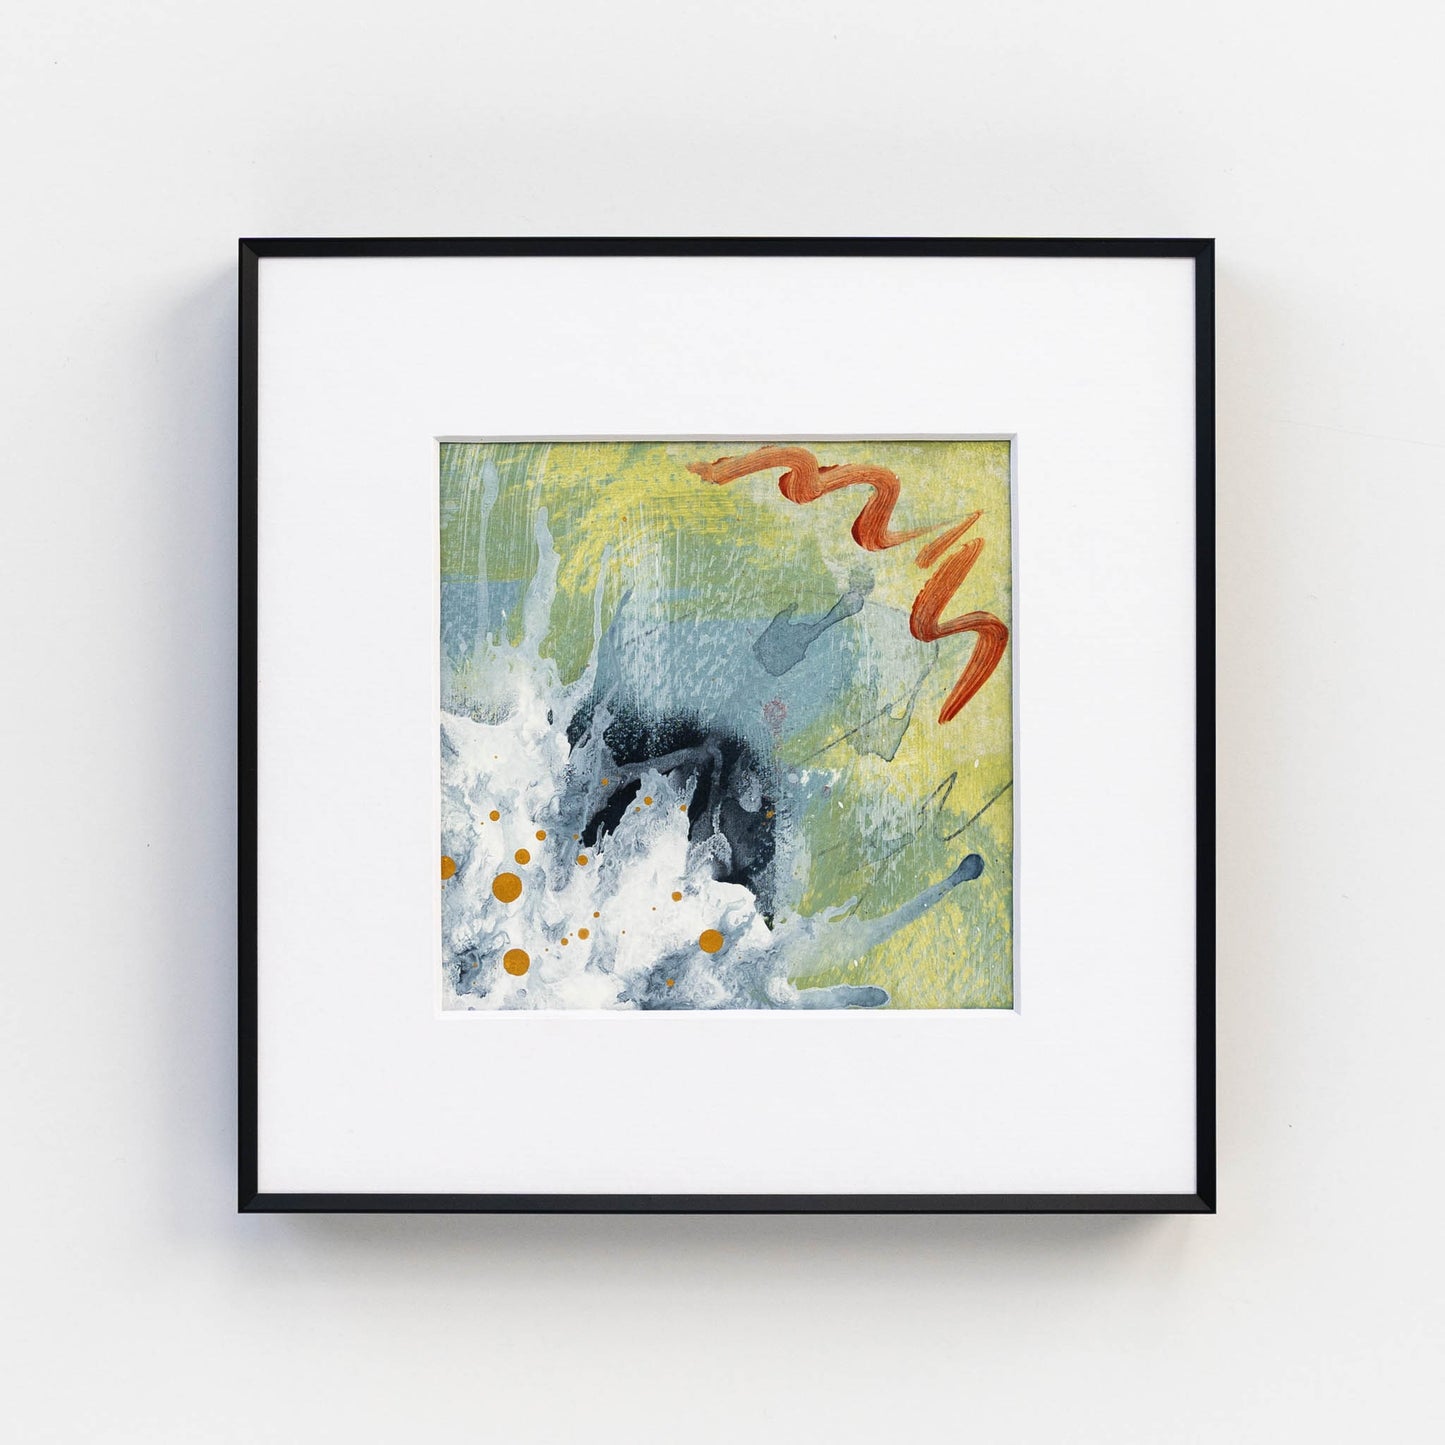 Spring Rain II | Framed 5x5 inch Acrylic Painting